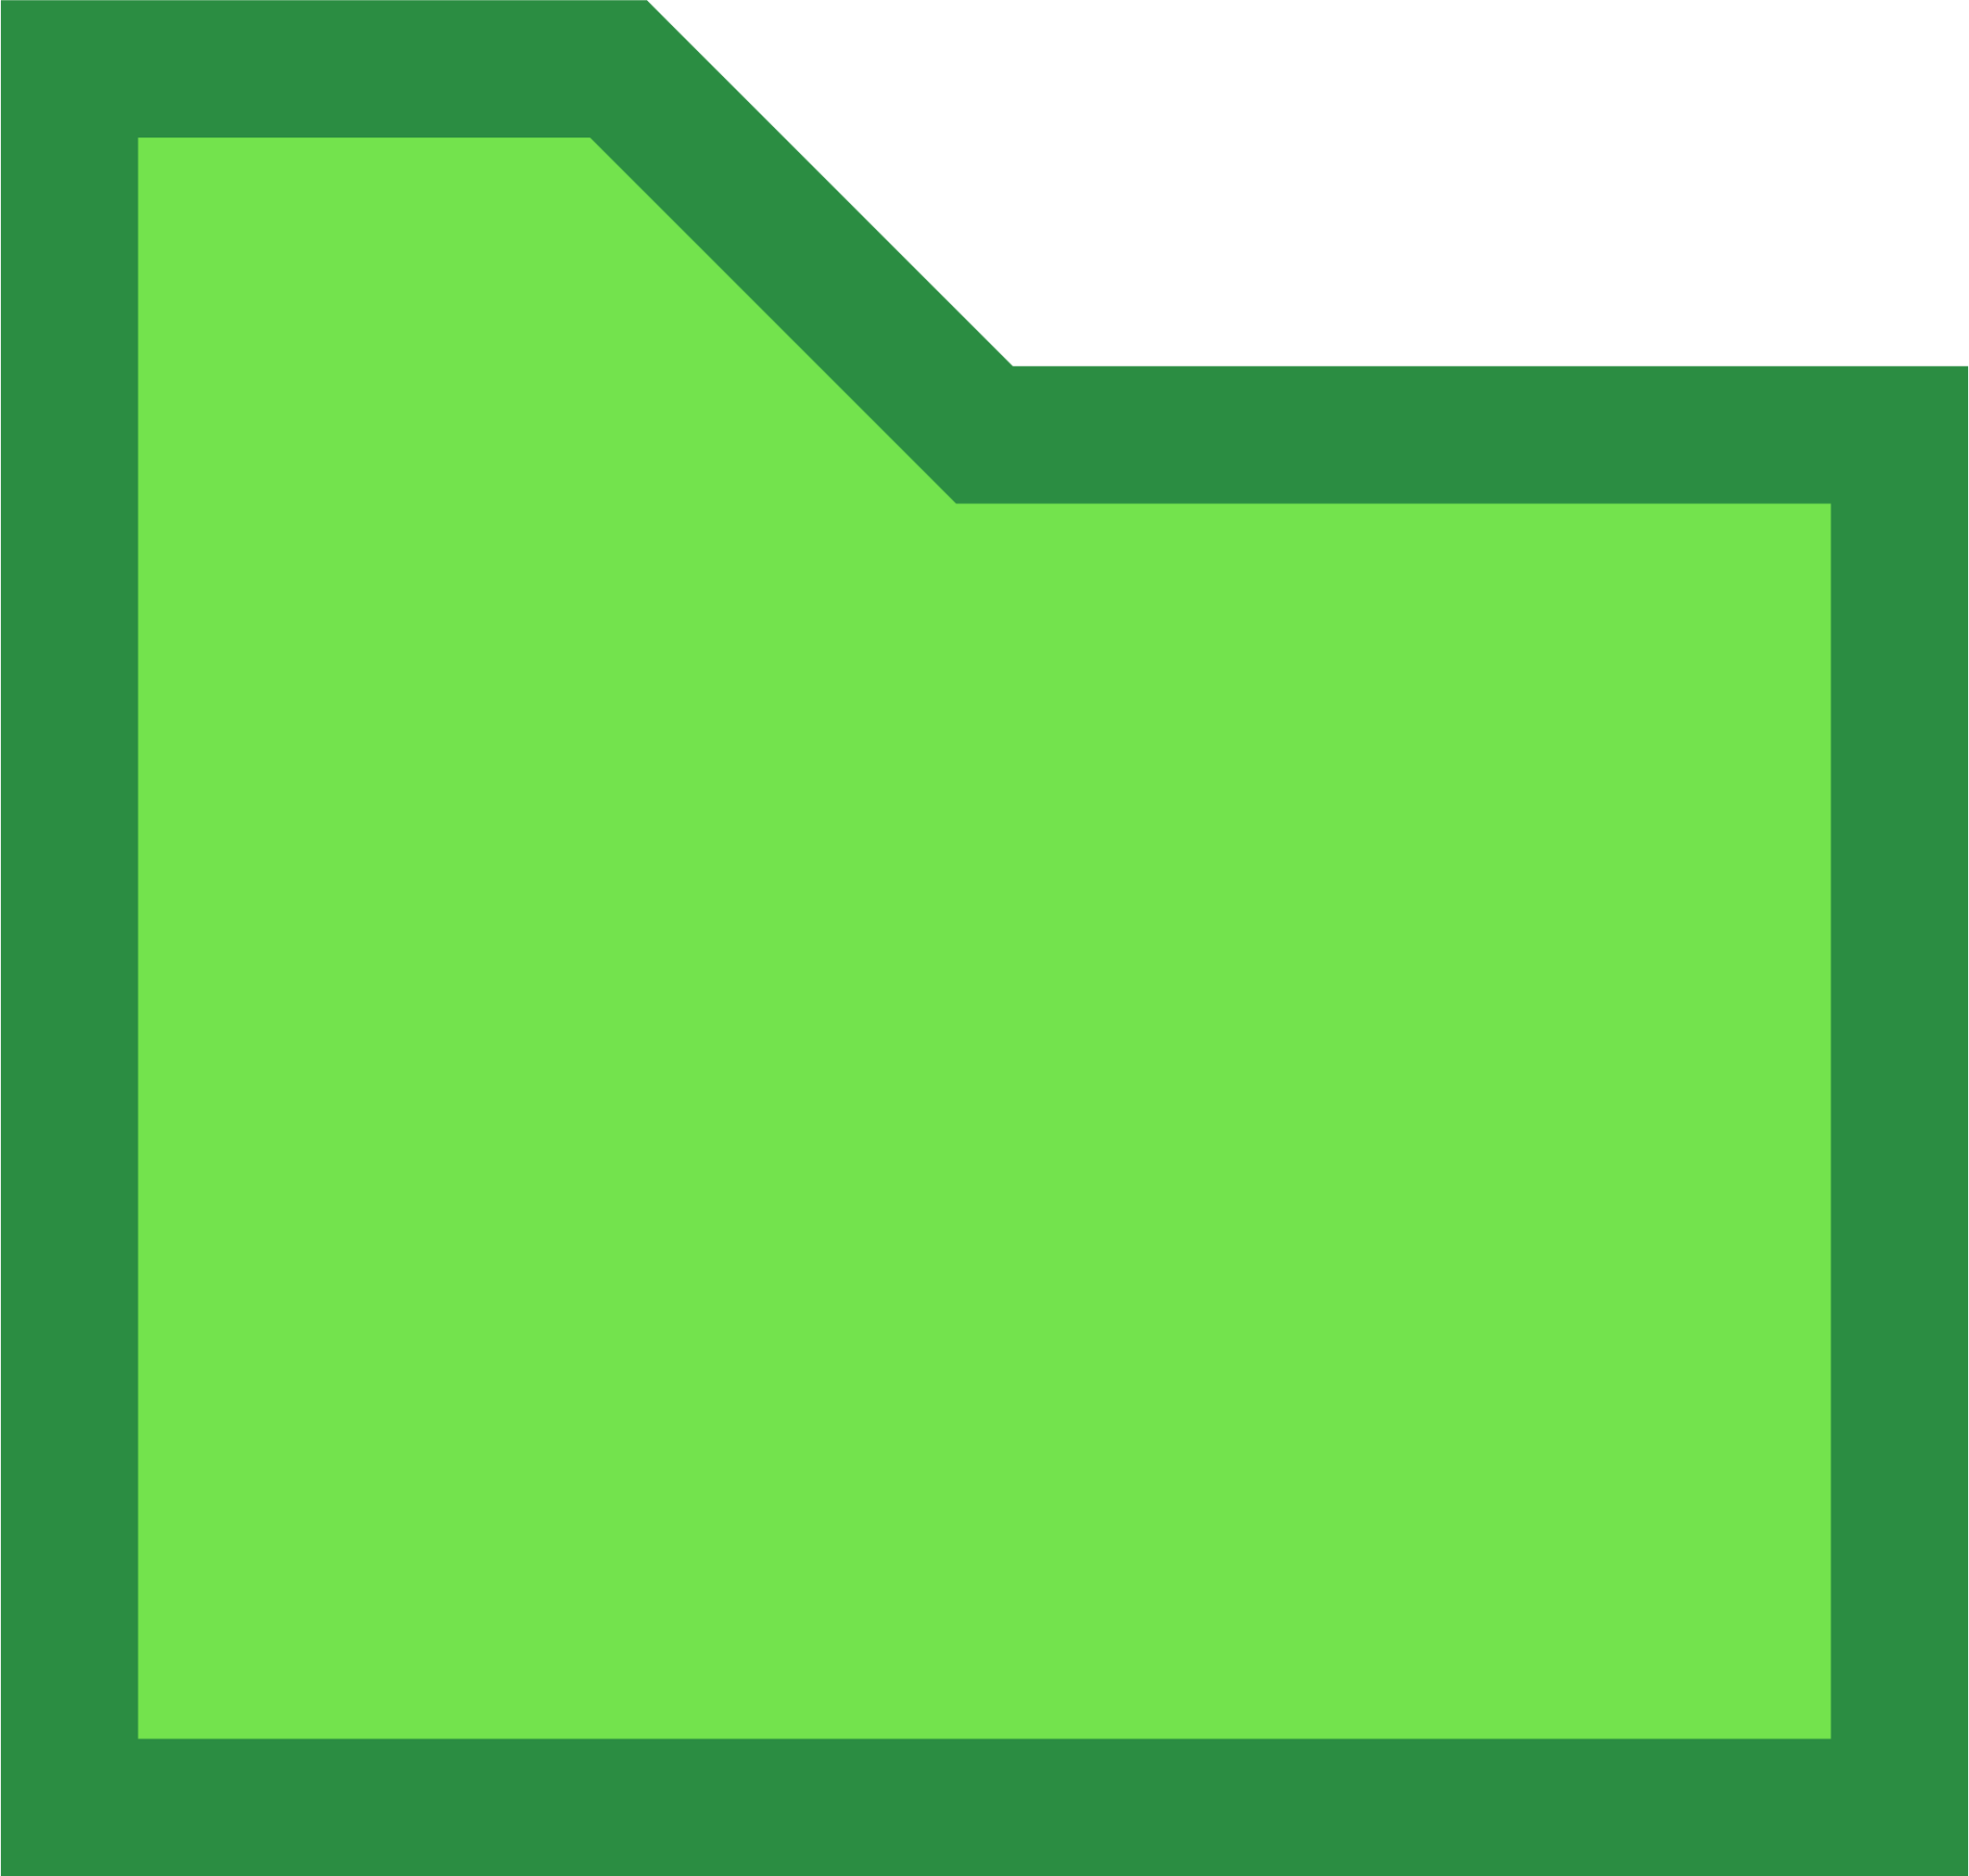 interface folder icon